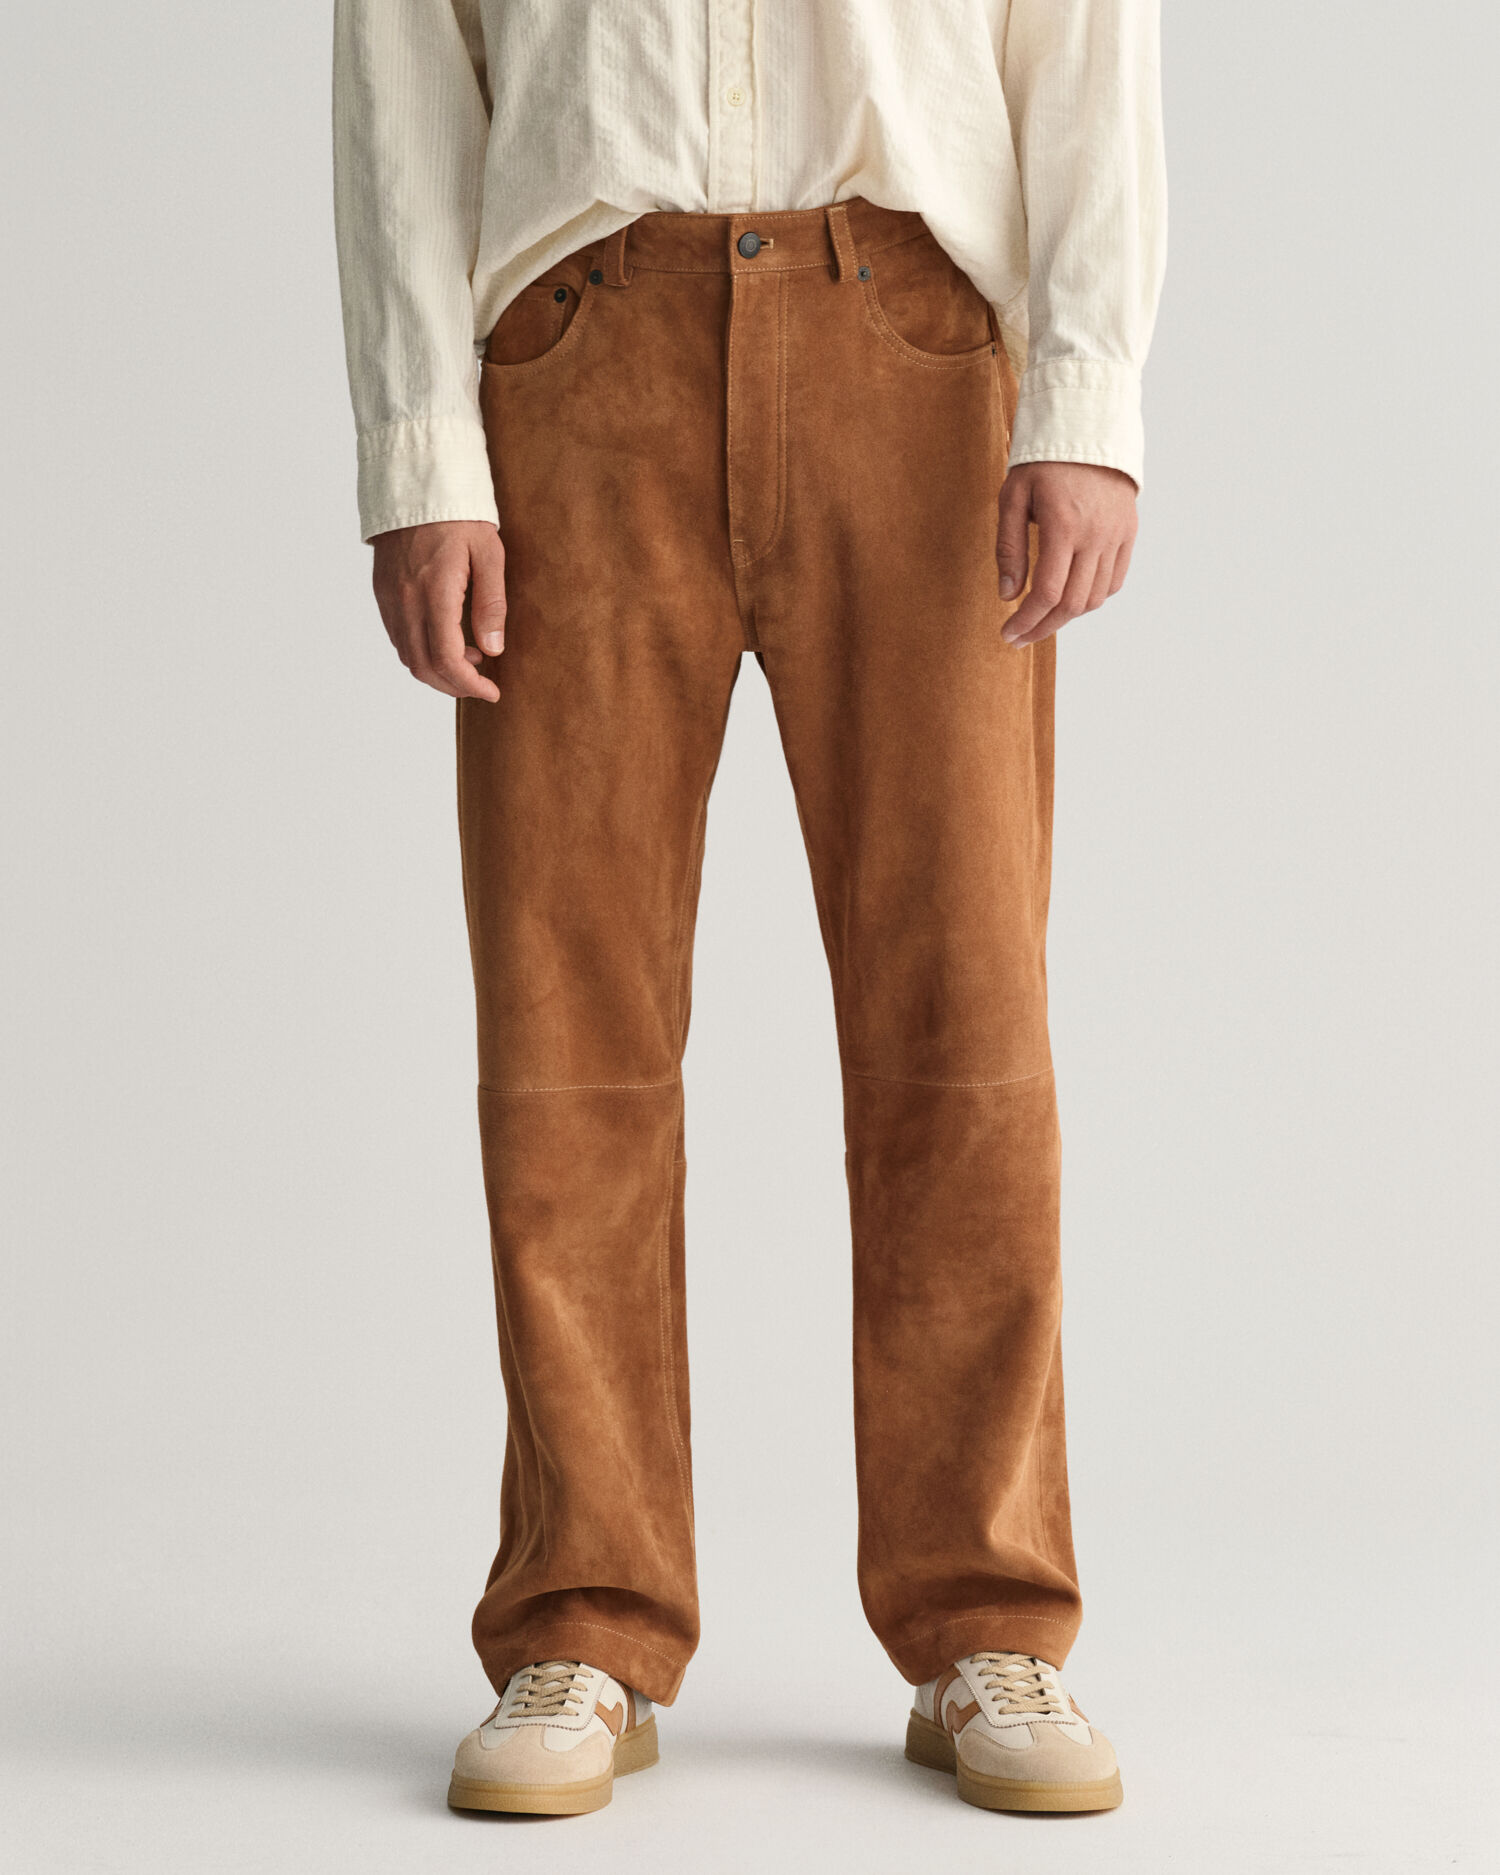 Tribal Geometry Bandana Print Vintage Casual Men's 3D Print Corduroy Pants  Pants Trousers Outdoor Daily Wear